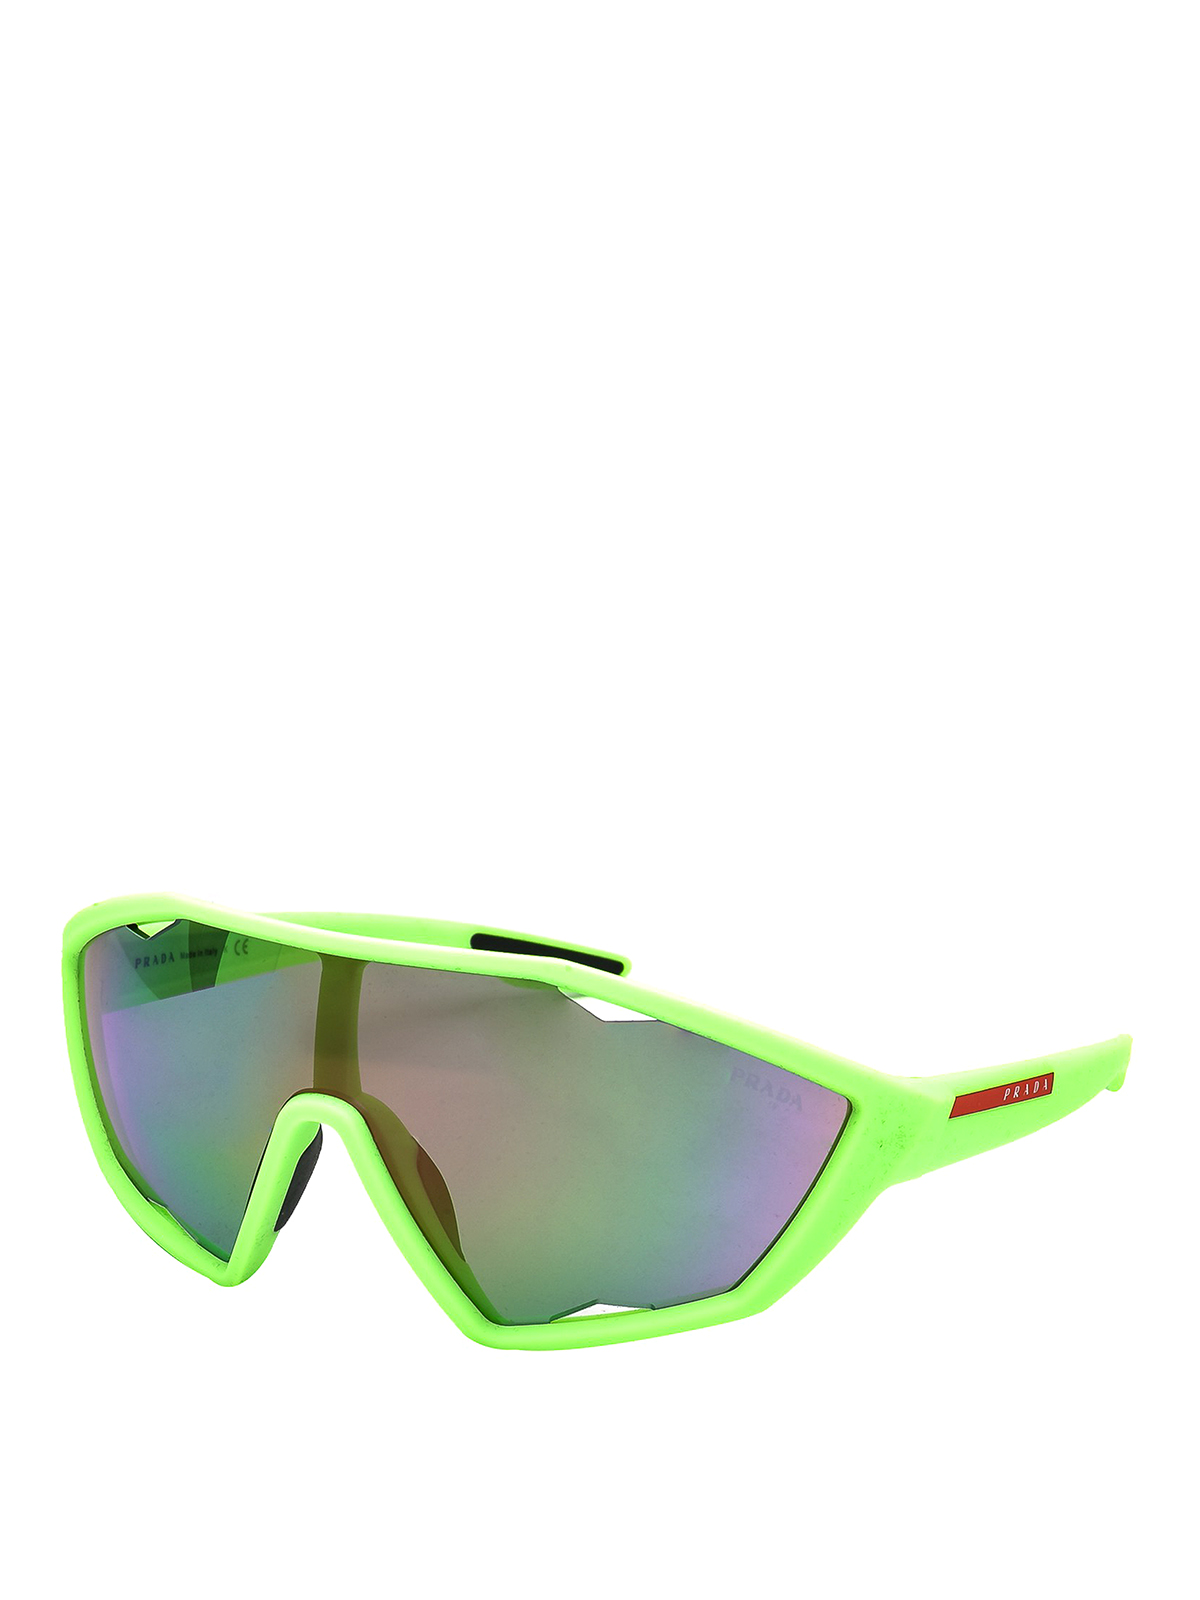 Prada - Neon green mask sunglasses with 